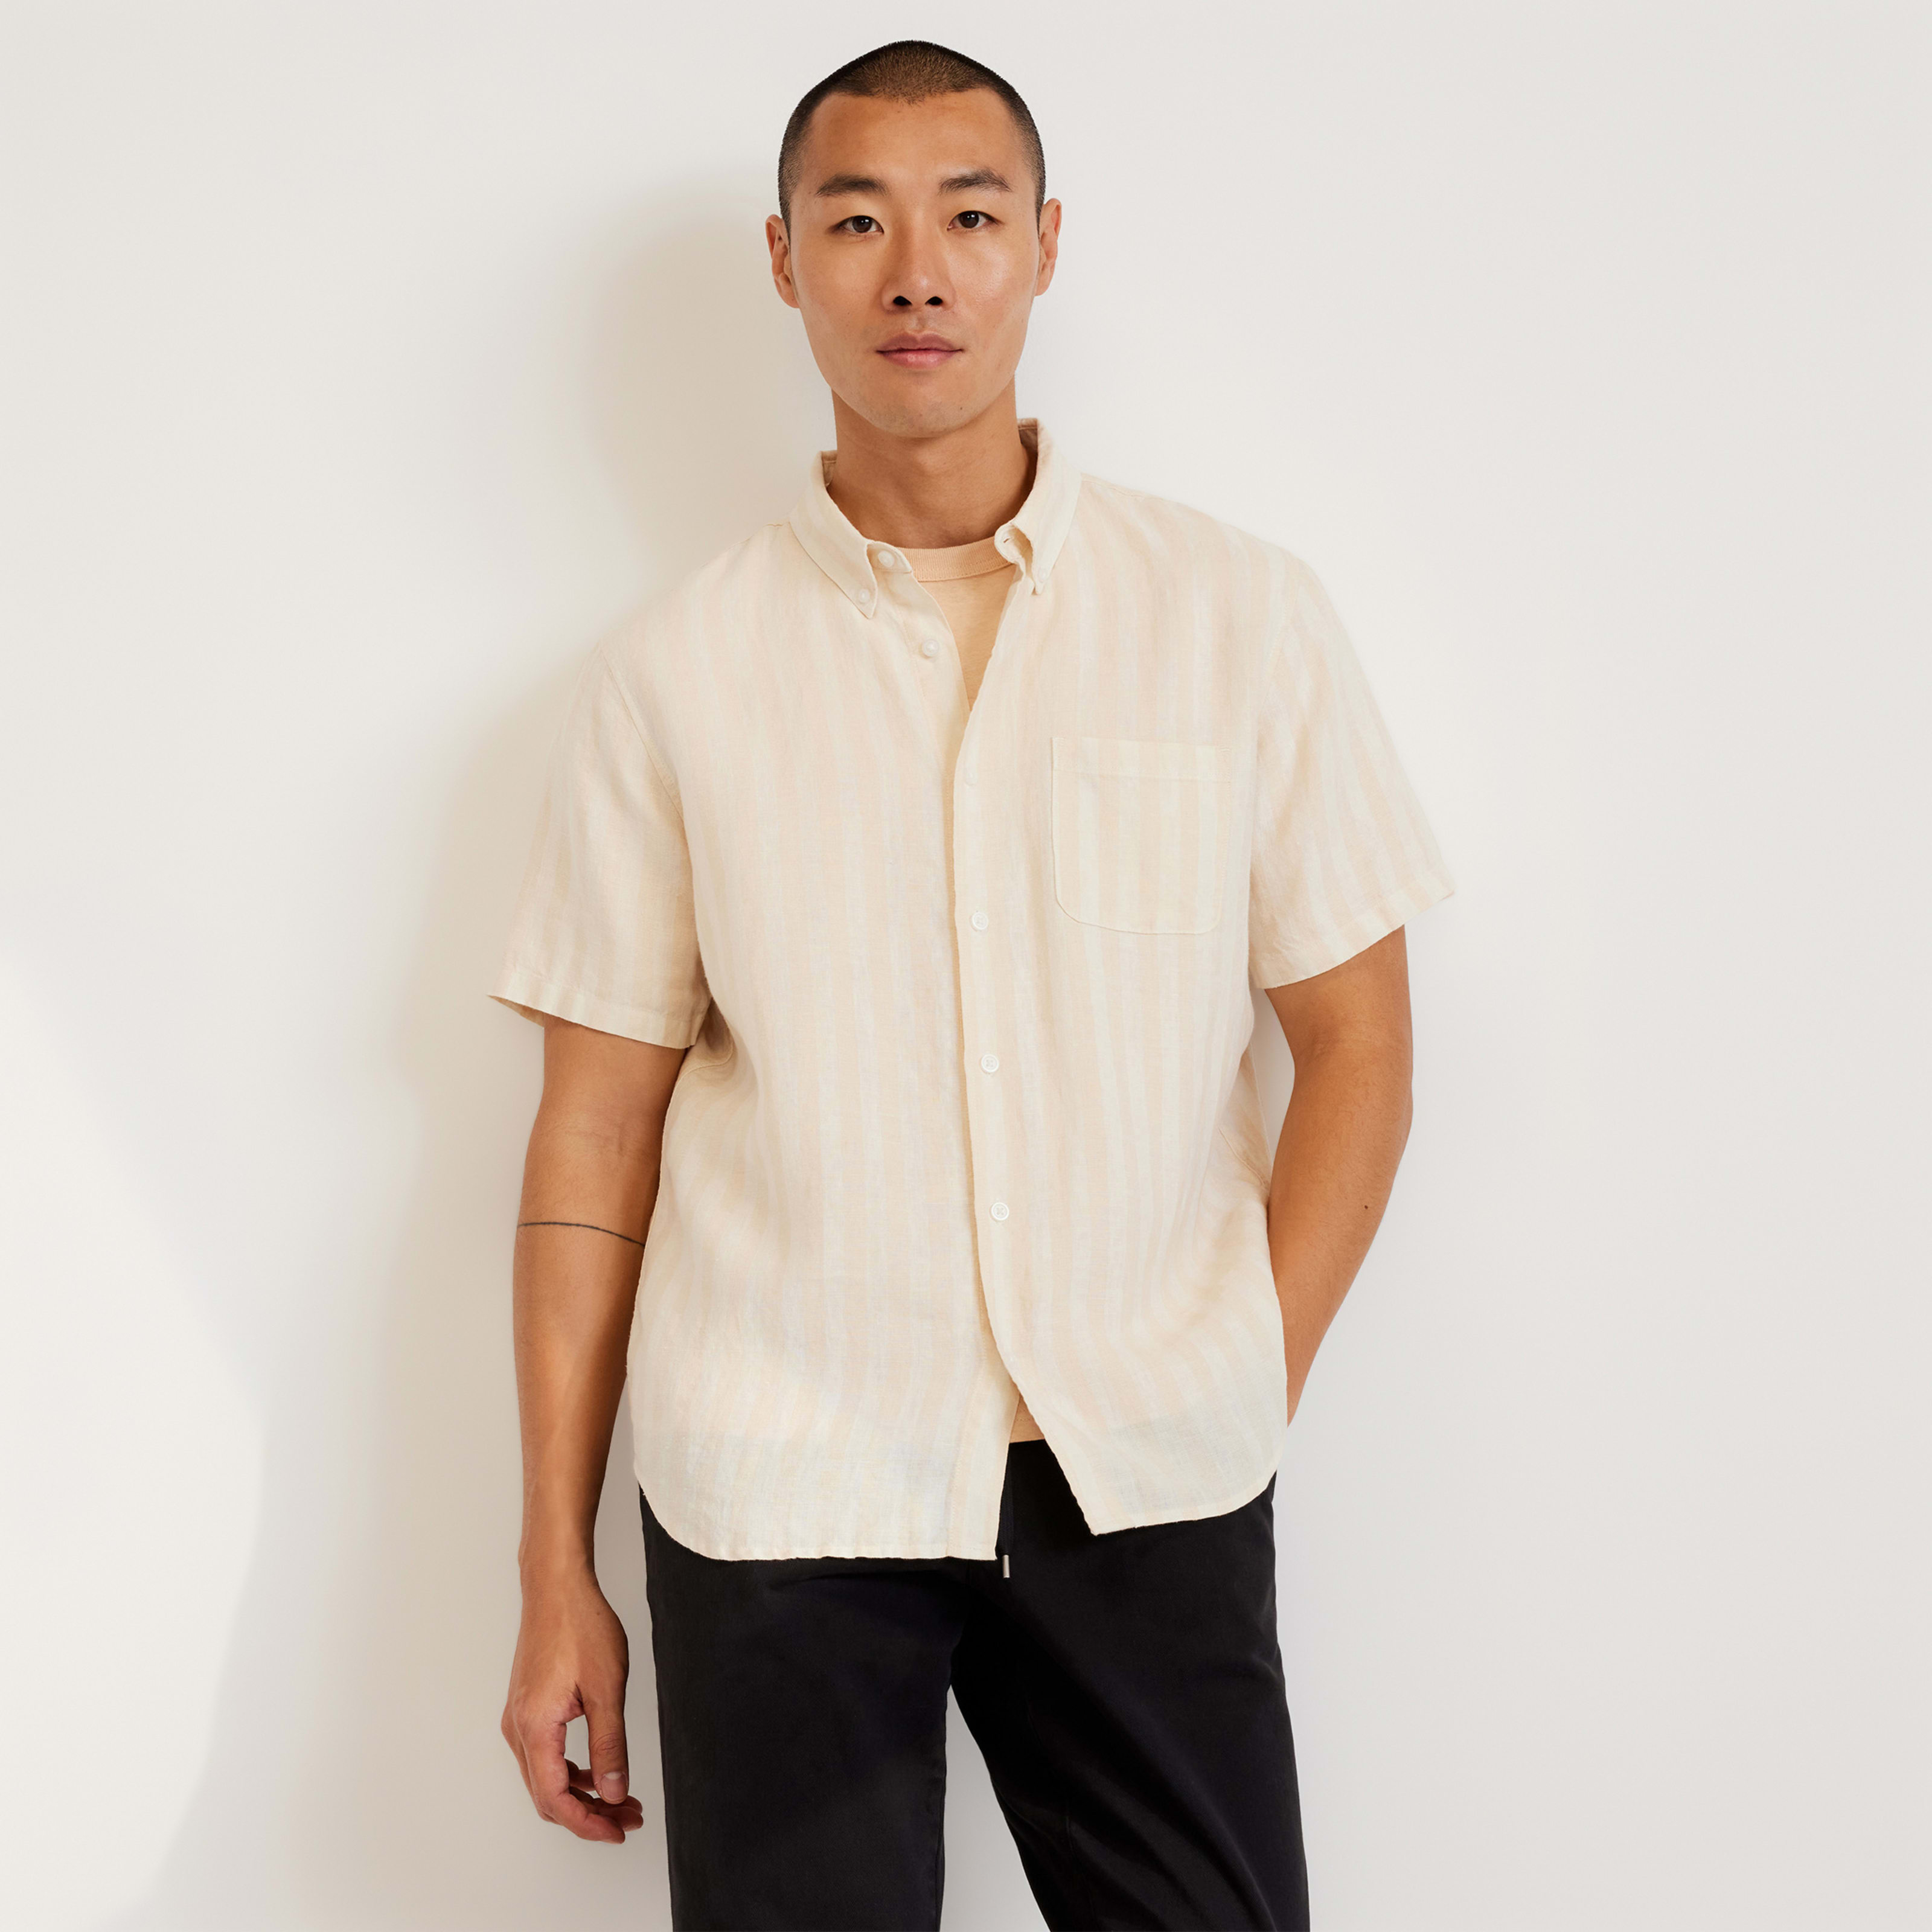 men's linen short-sleeve standard fit shirt by everlane in brazilian sand/canvas tan, size xs